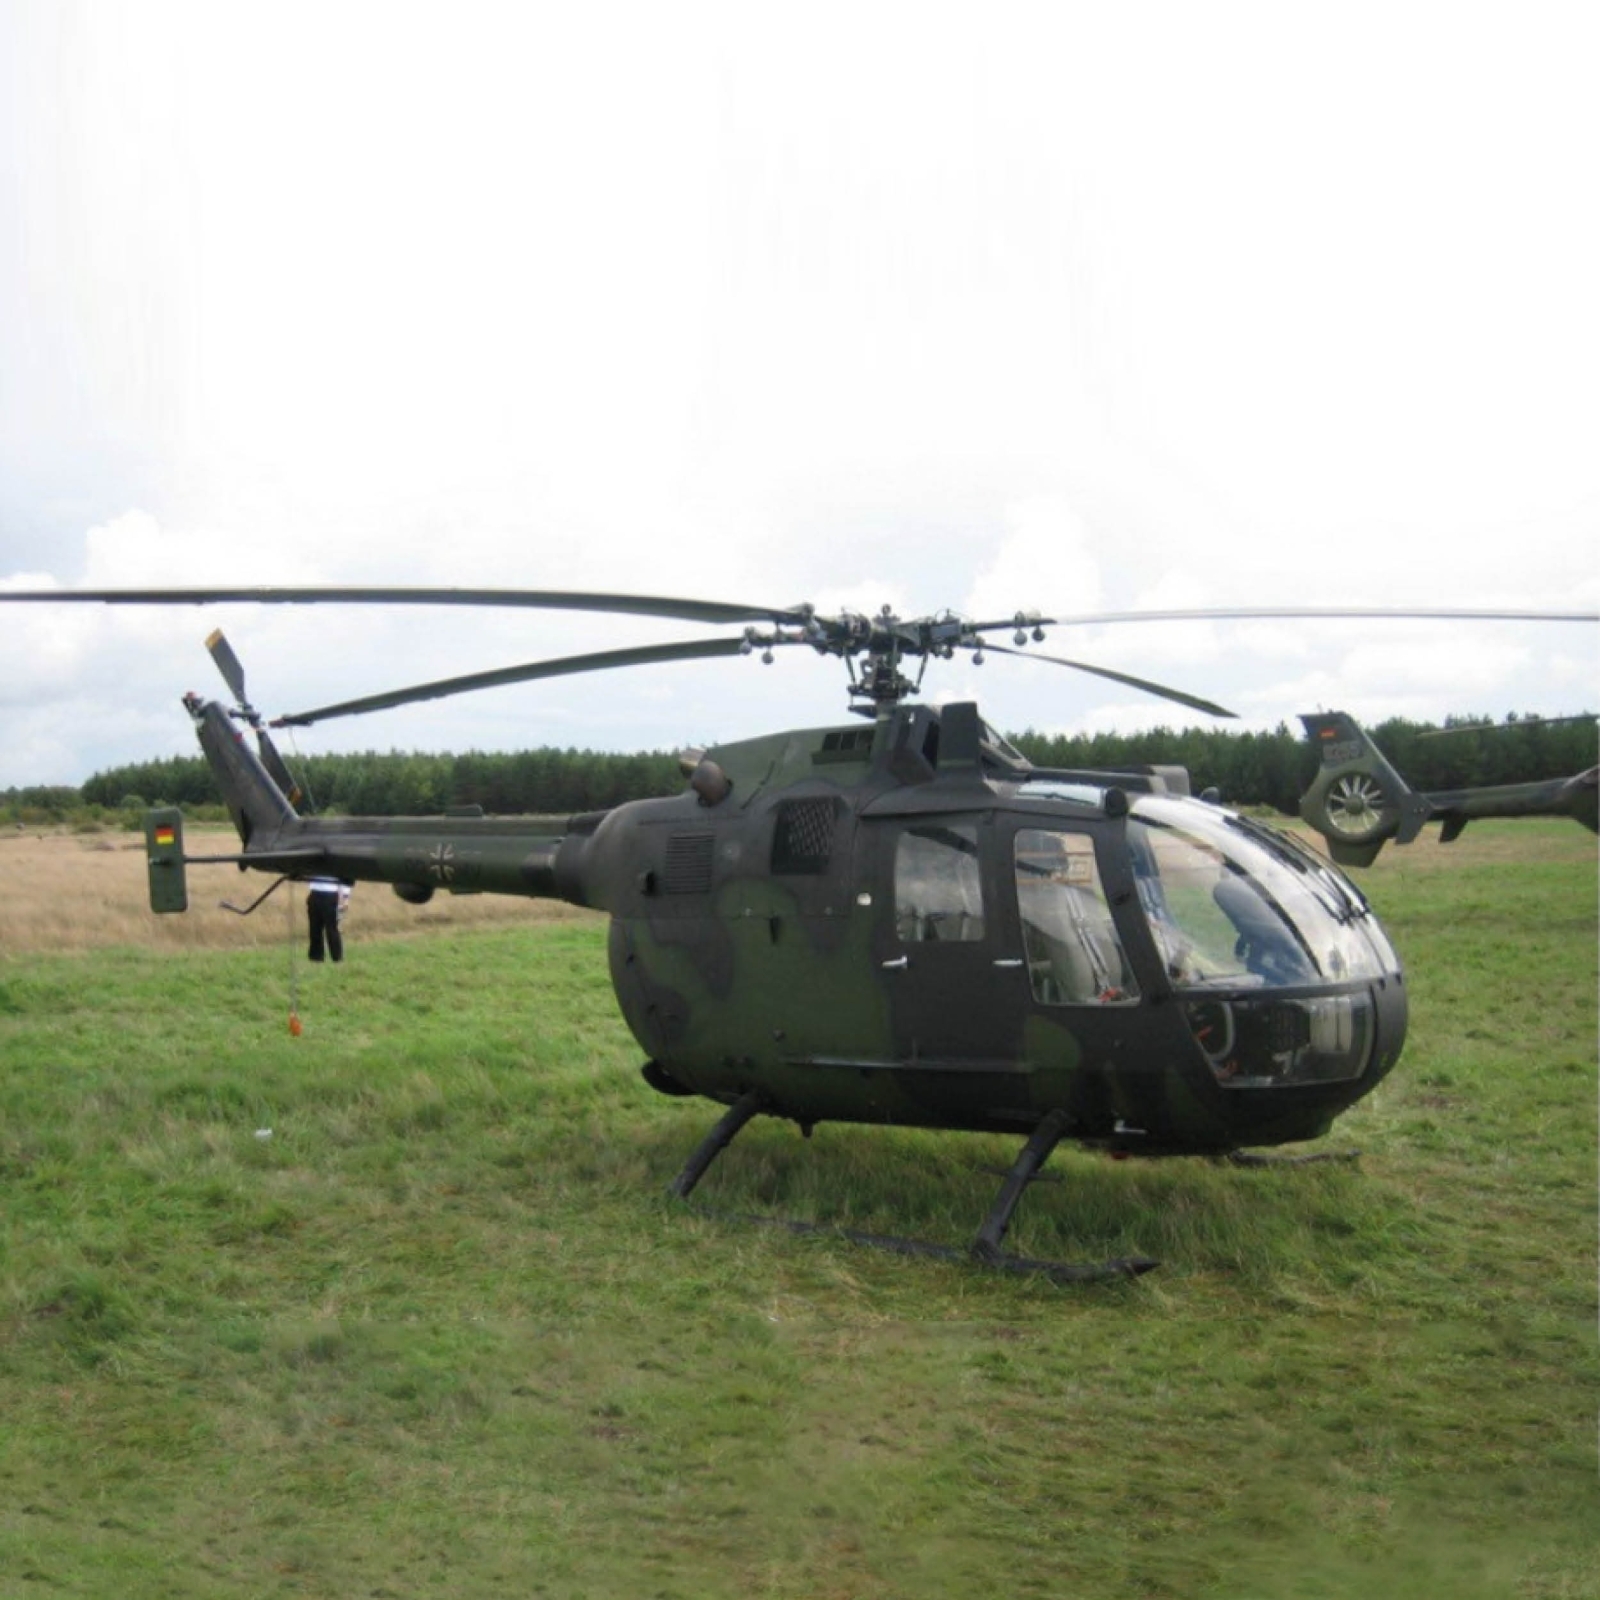 Aviationtag Bundeswehr Helicopter Bo 105 - 86+14 Black